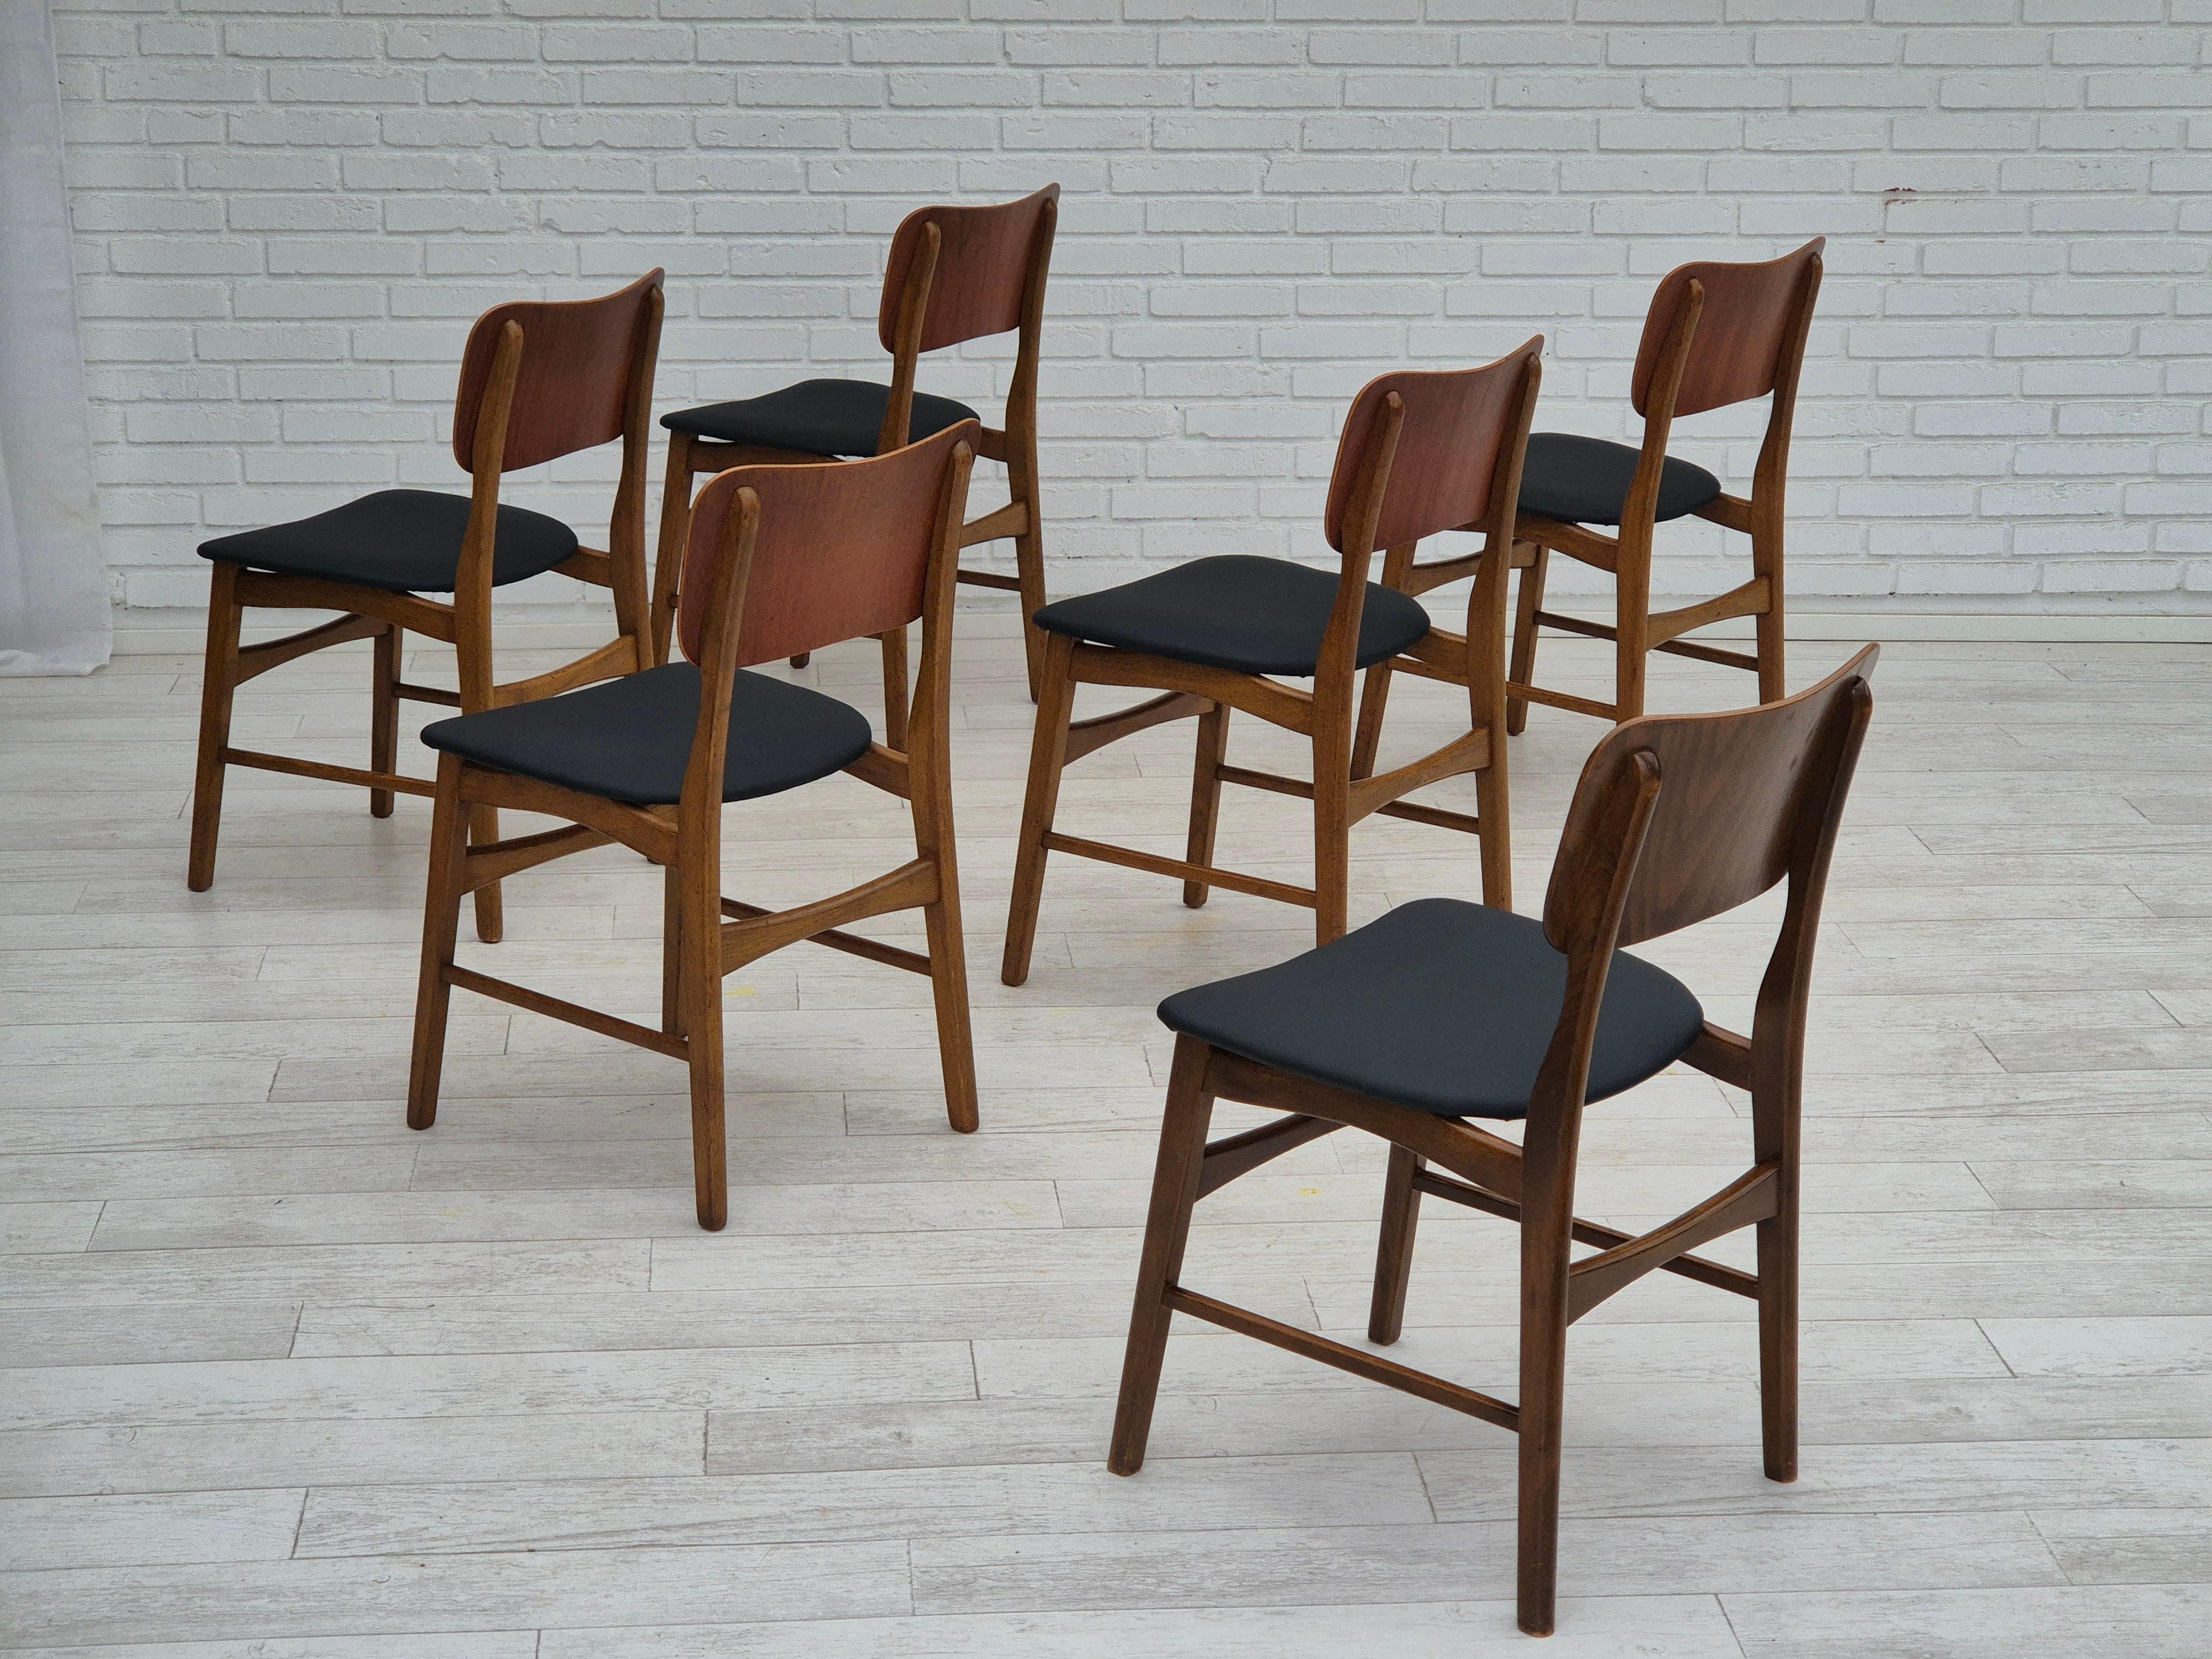 Mid-20th Century 1960s, Danish design by Ib Kofod Larsen, Christensen & Larsen, set of chairs.